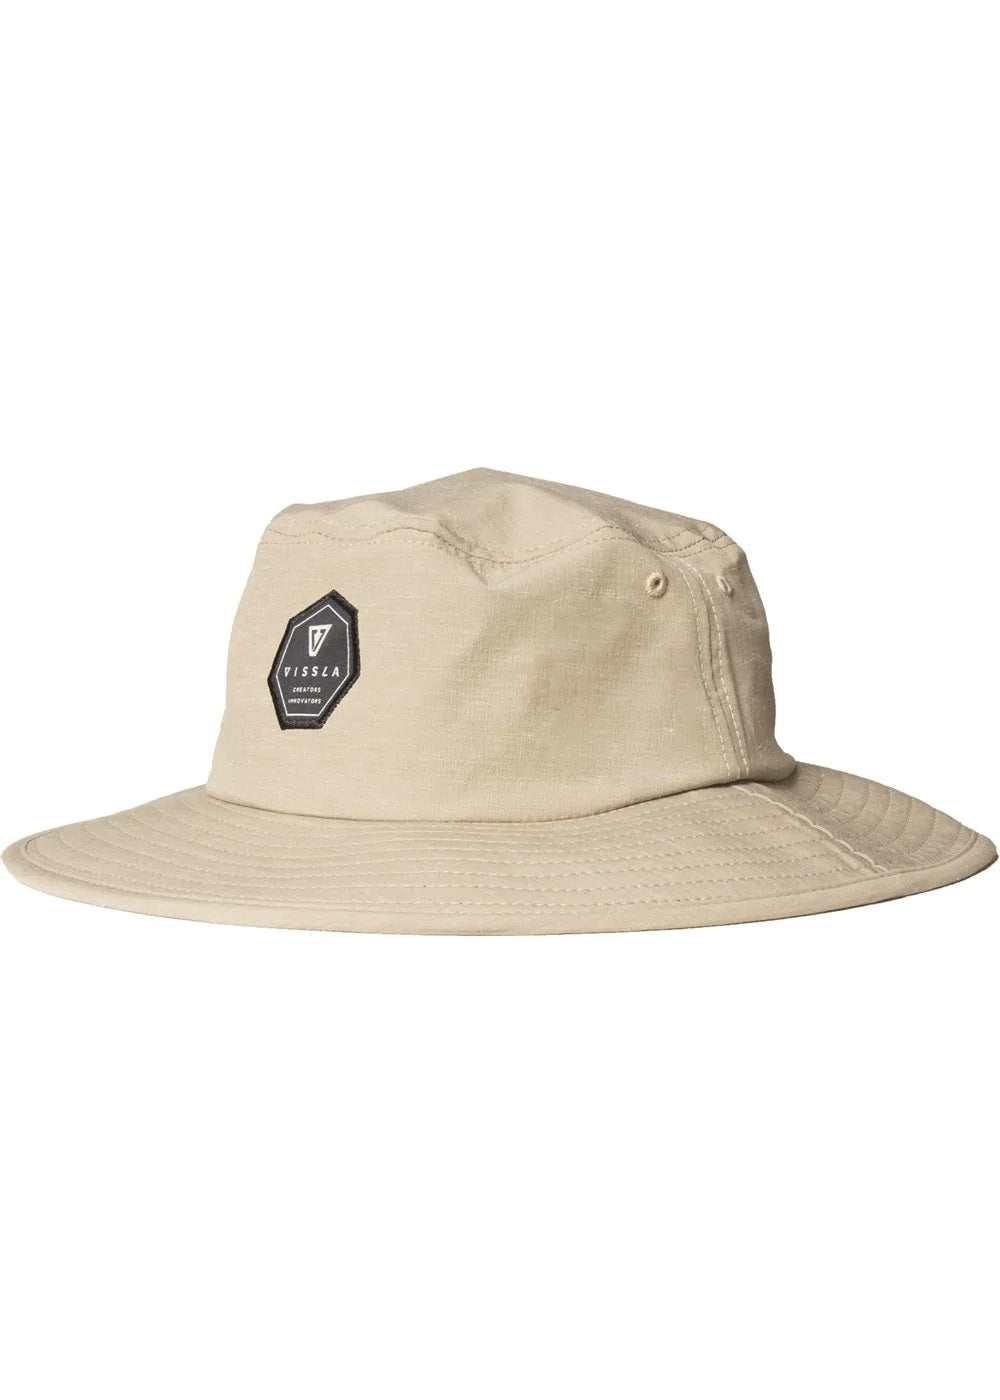 Stokem Eco Bucket Hat